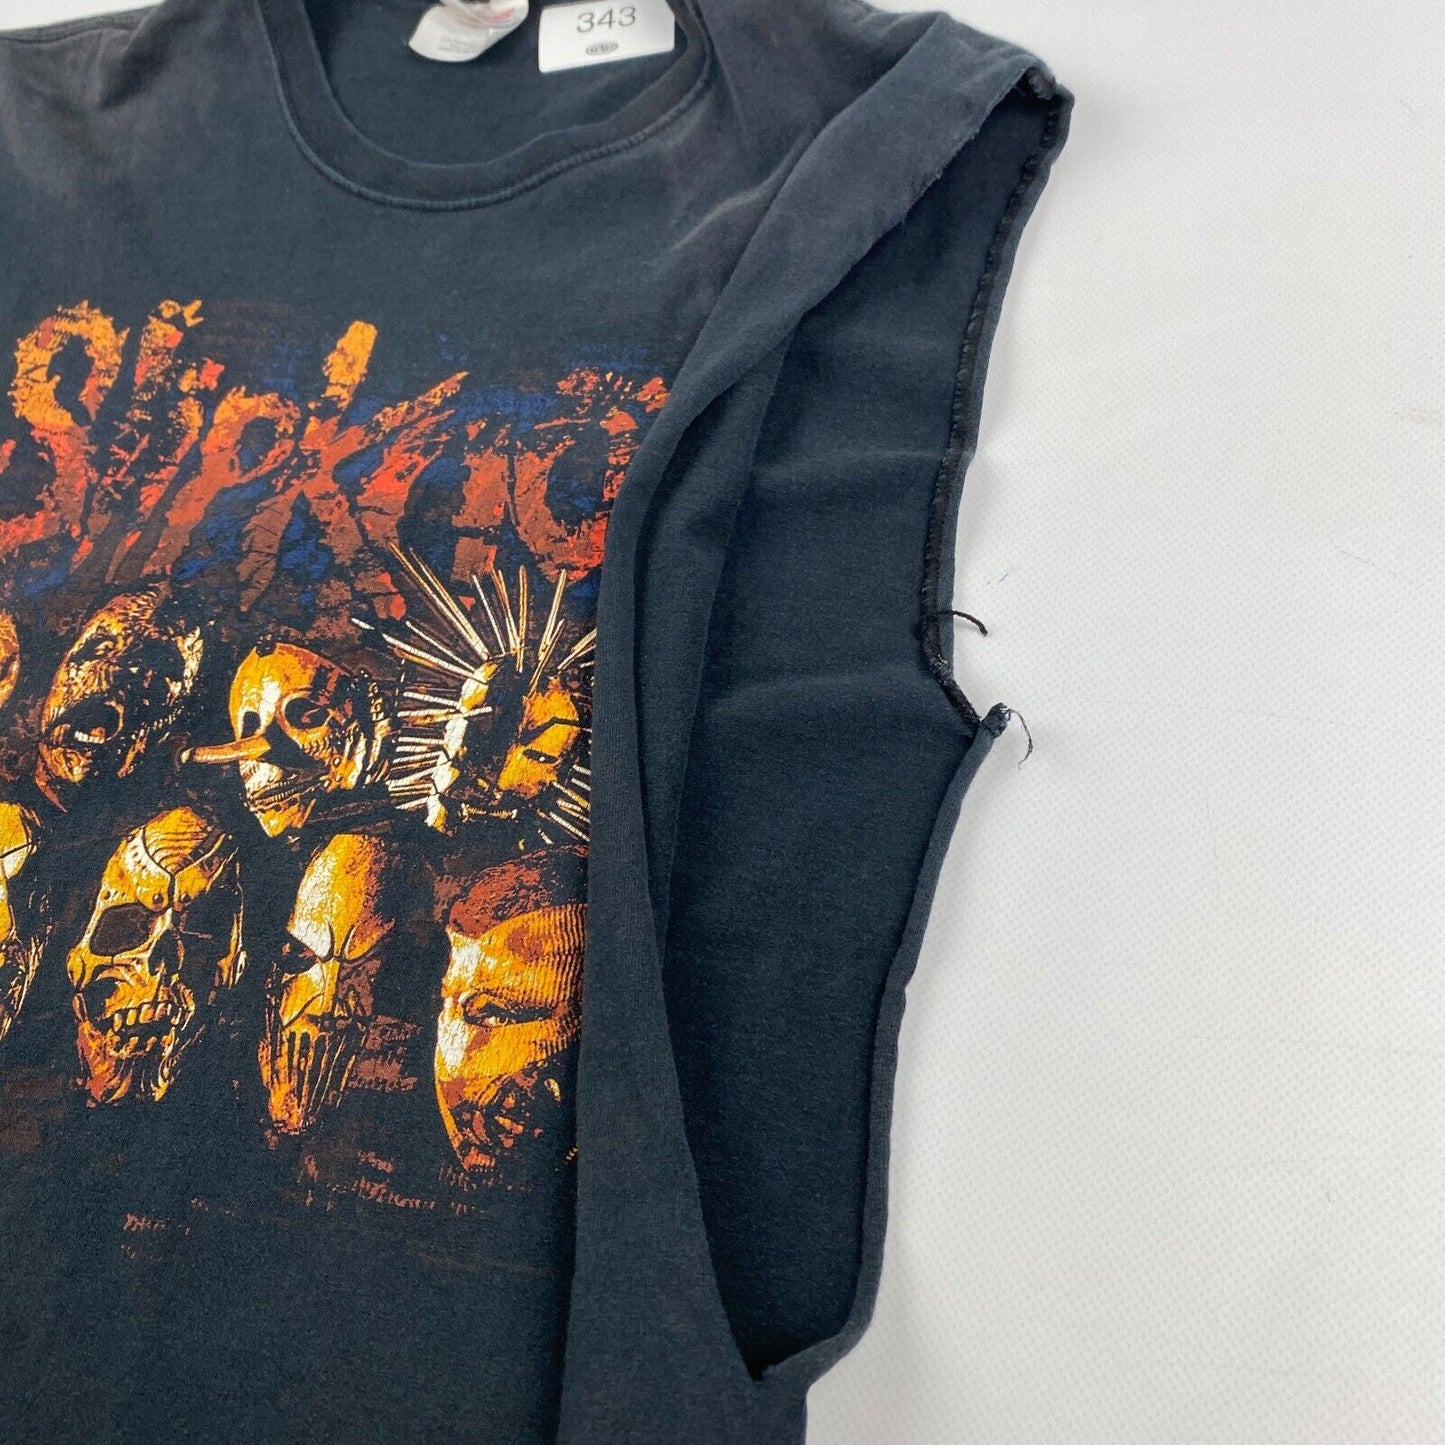 VINTAGE Slipknot Big Graphic Band Sleeveless T-Shirt sz Medium Men